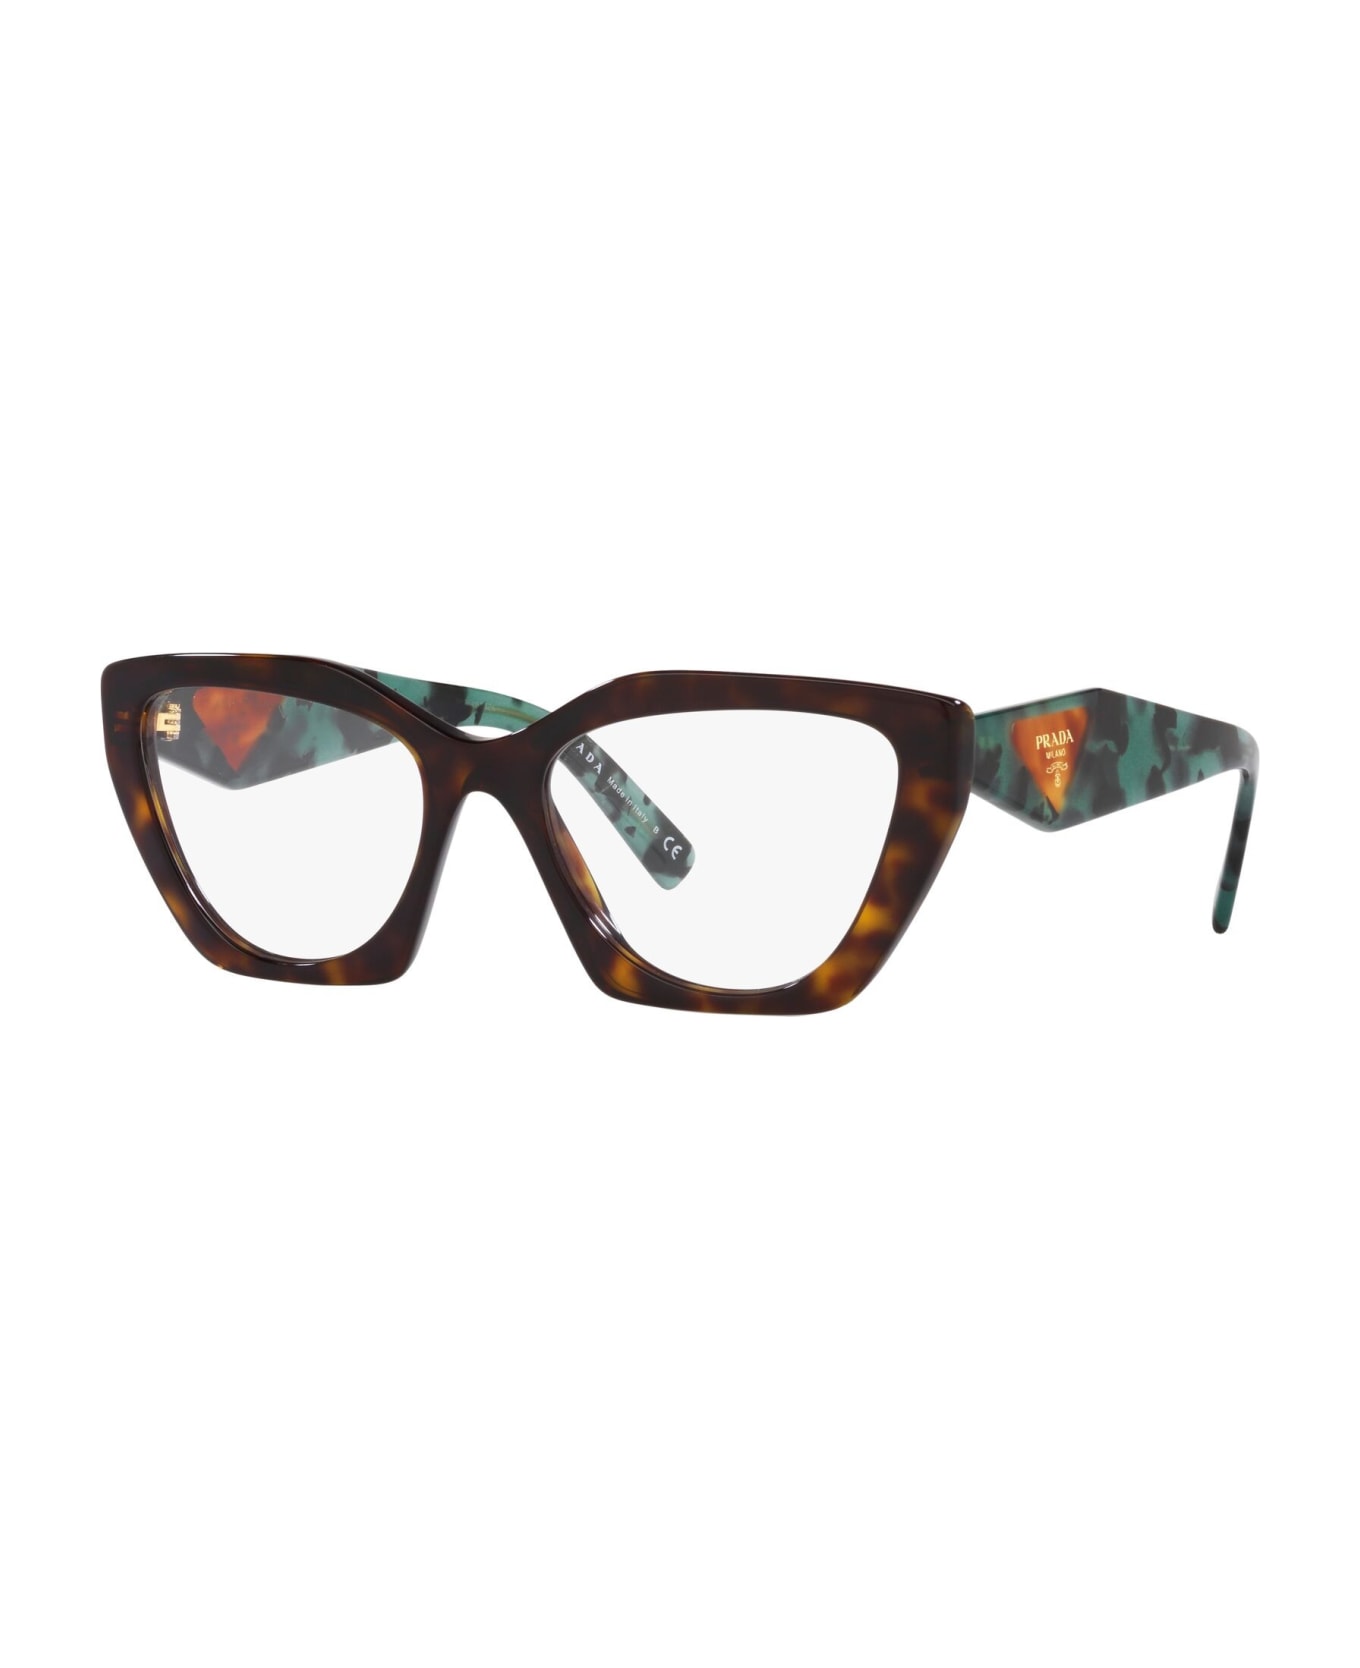 Prada Eyewear Glasses - Multicolor